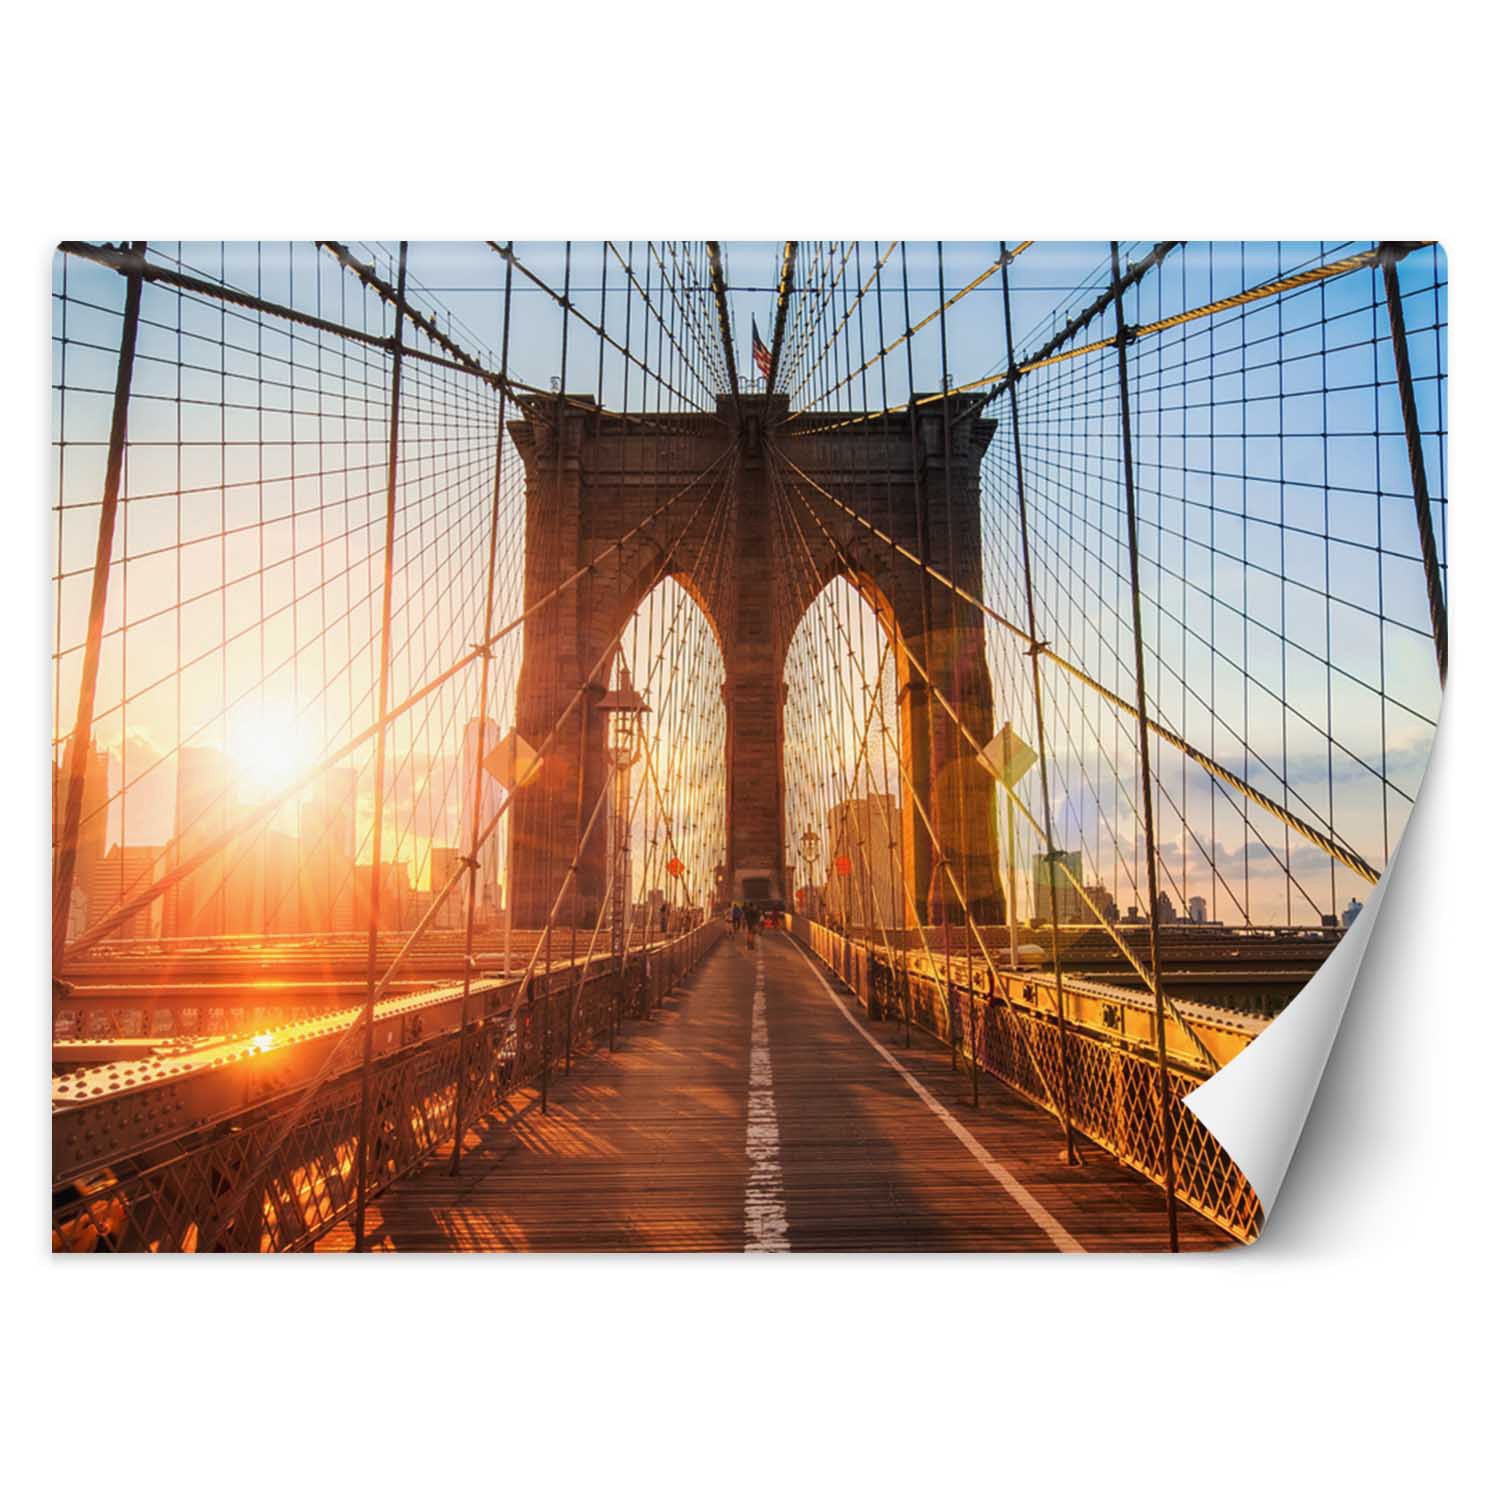 Trend24 – Behang – Brooklyn Bridge – Vliesbehang – Fotobehang – Behang Woonkamer – 450x315x2 cm – Incl. behanglijm